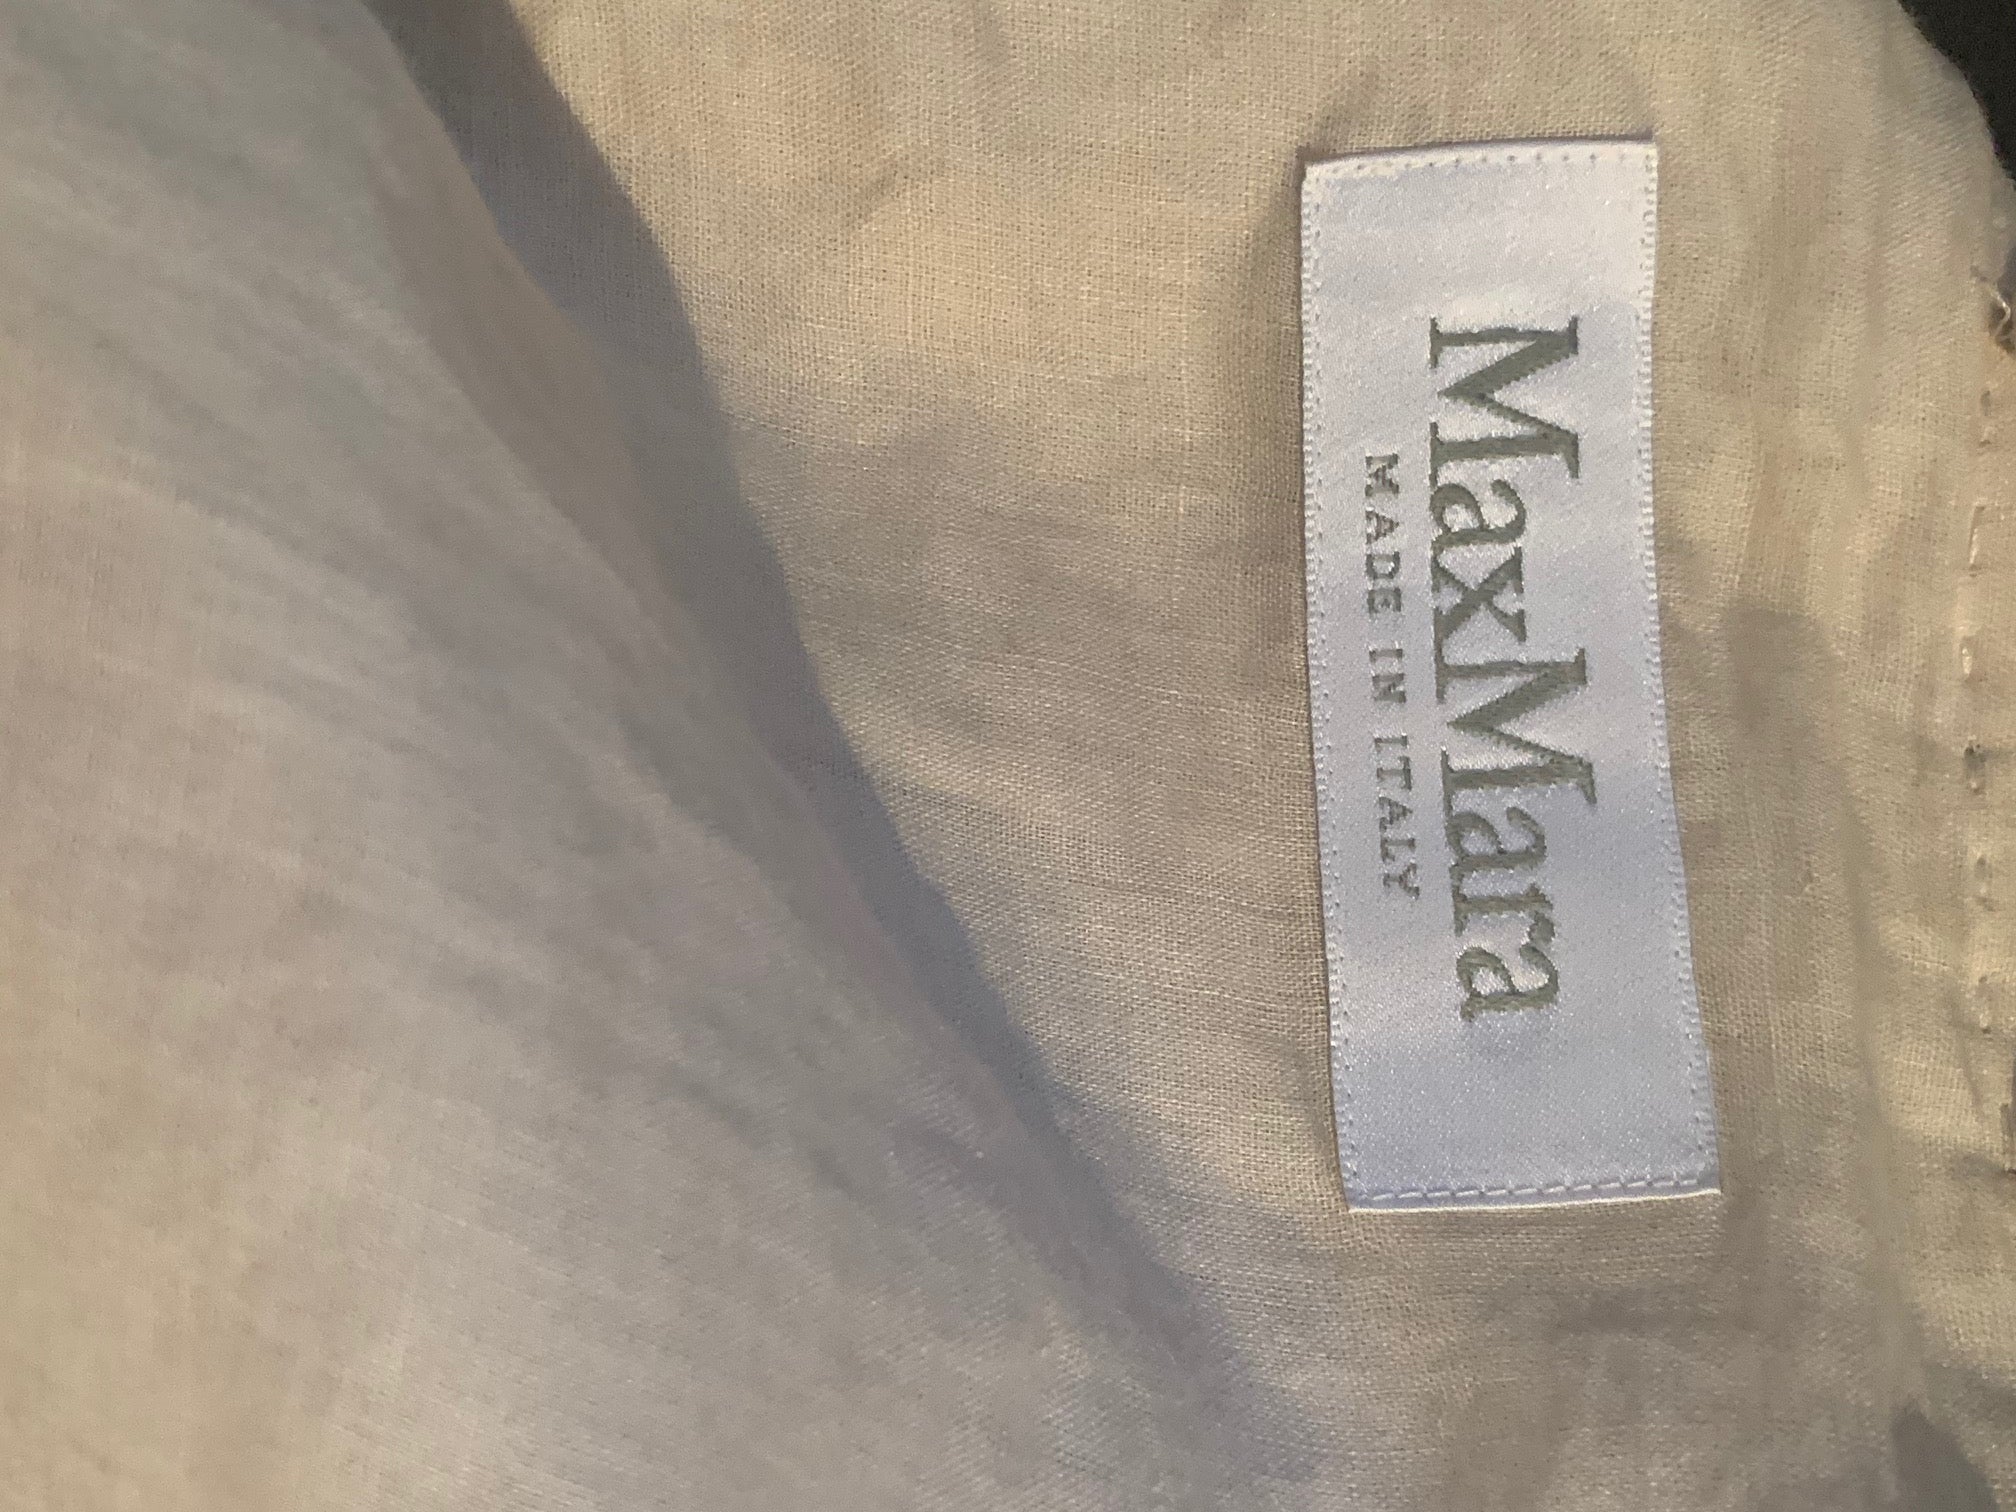 MaxMara Belted Overcoat in a beautiful grey tone